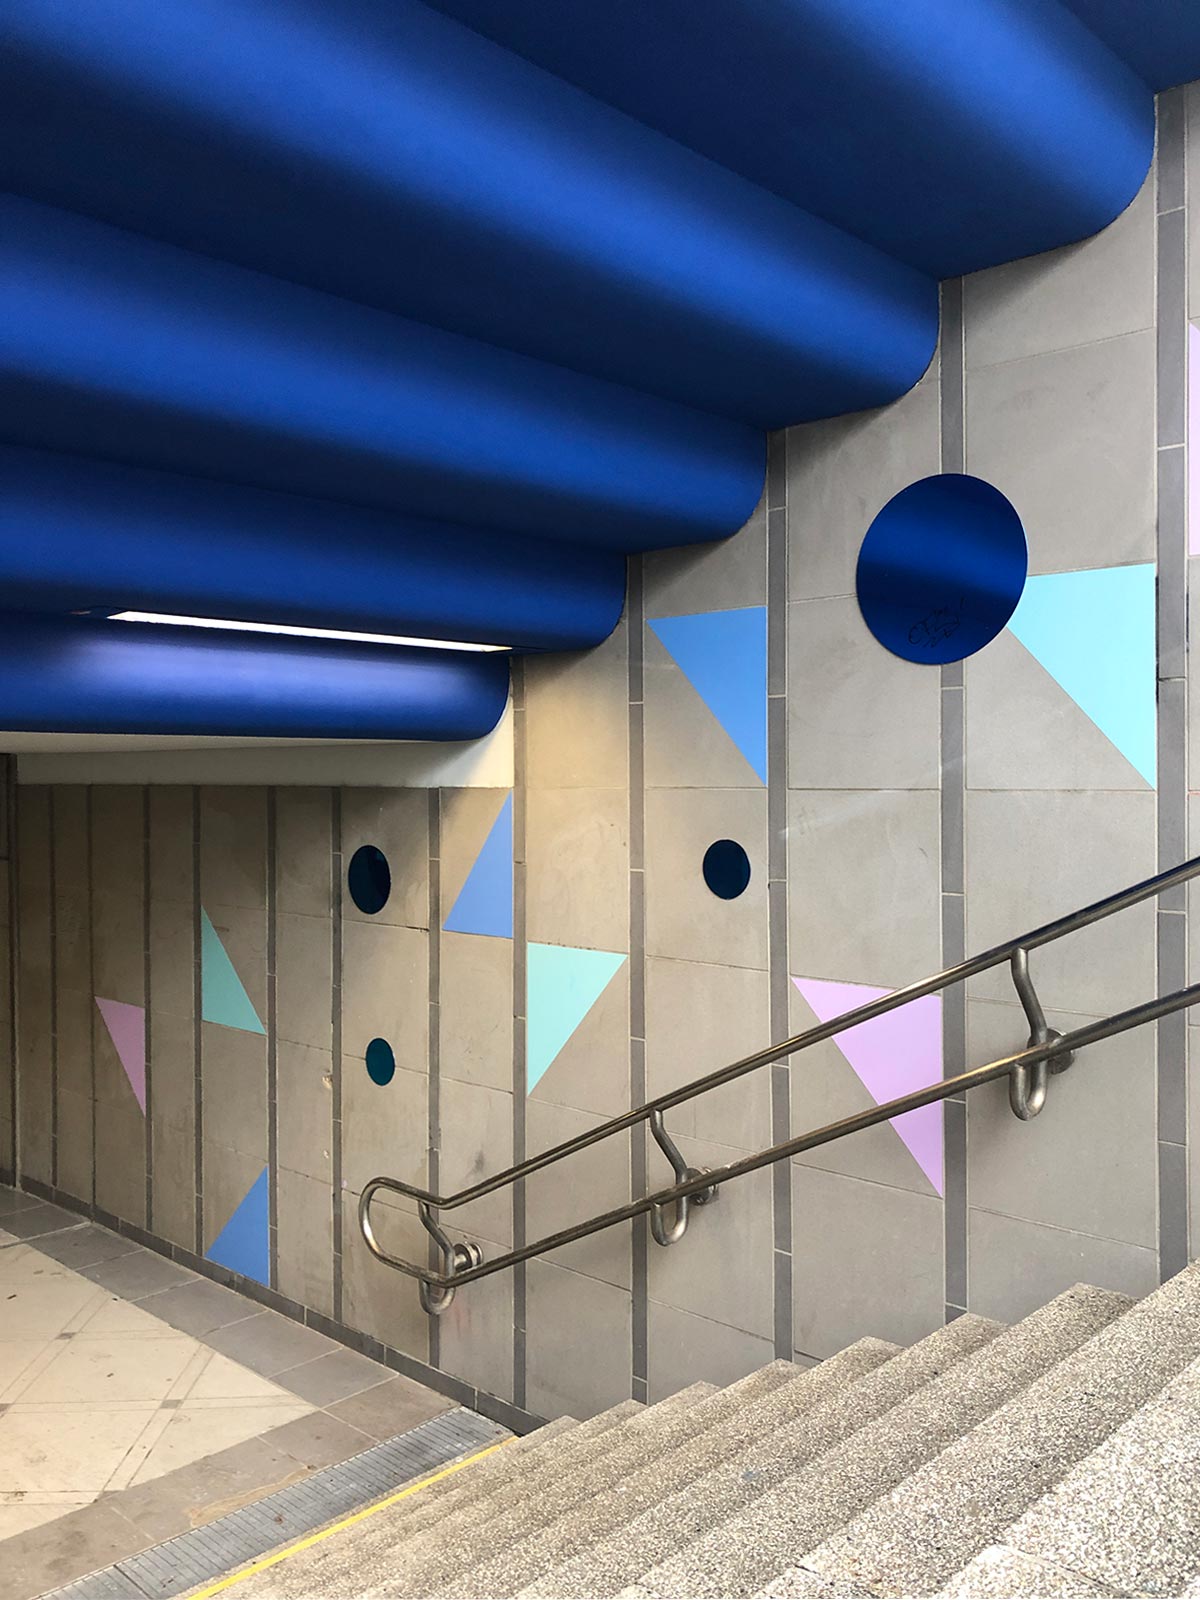 Neues Design in blau uns türkis am Zugang zur S-Bahn-Station Kaiserlei